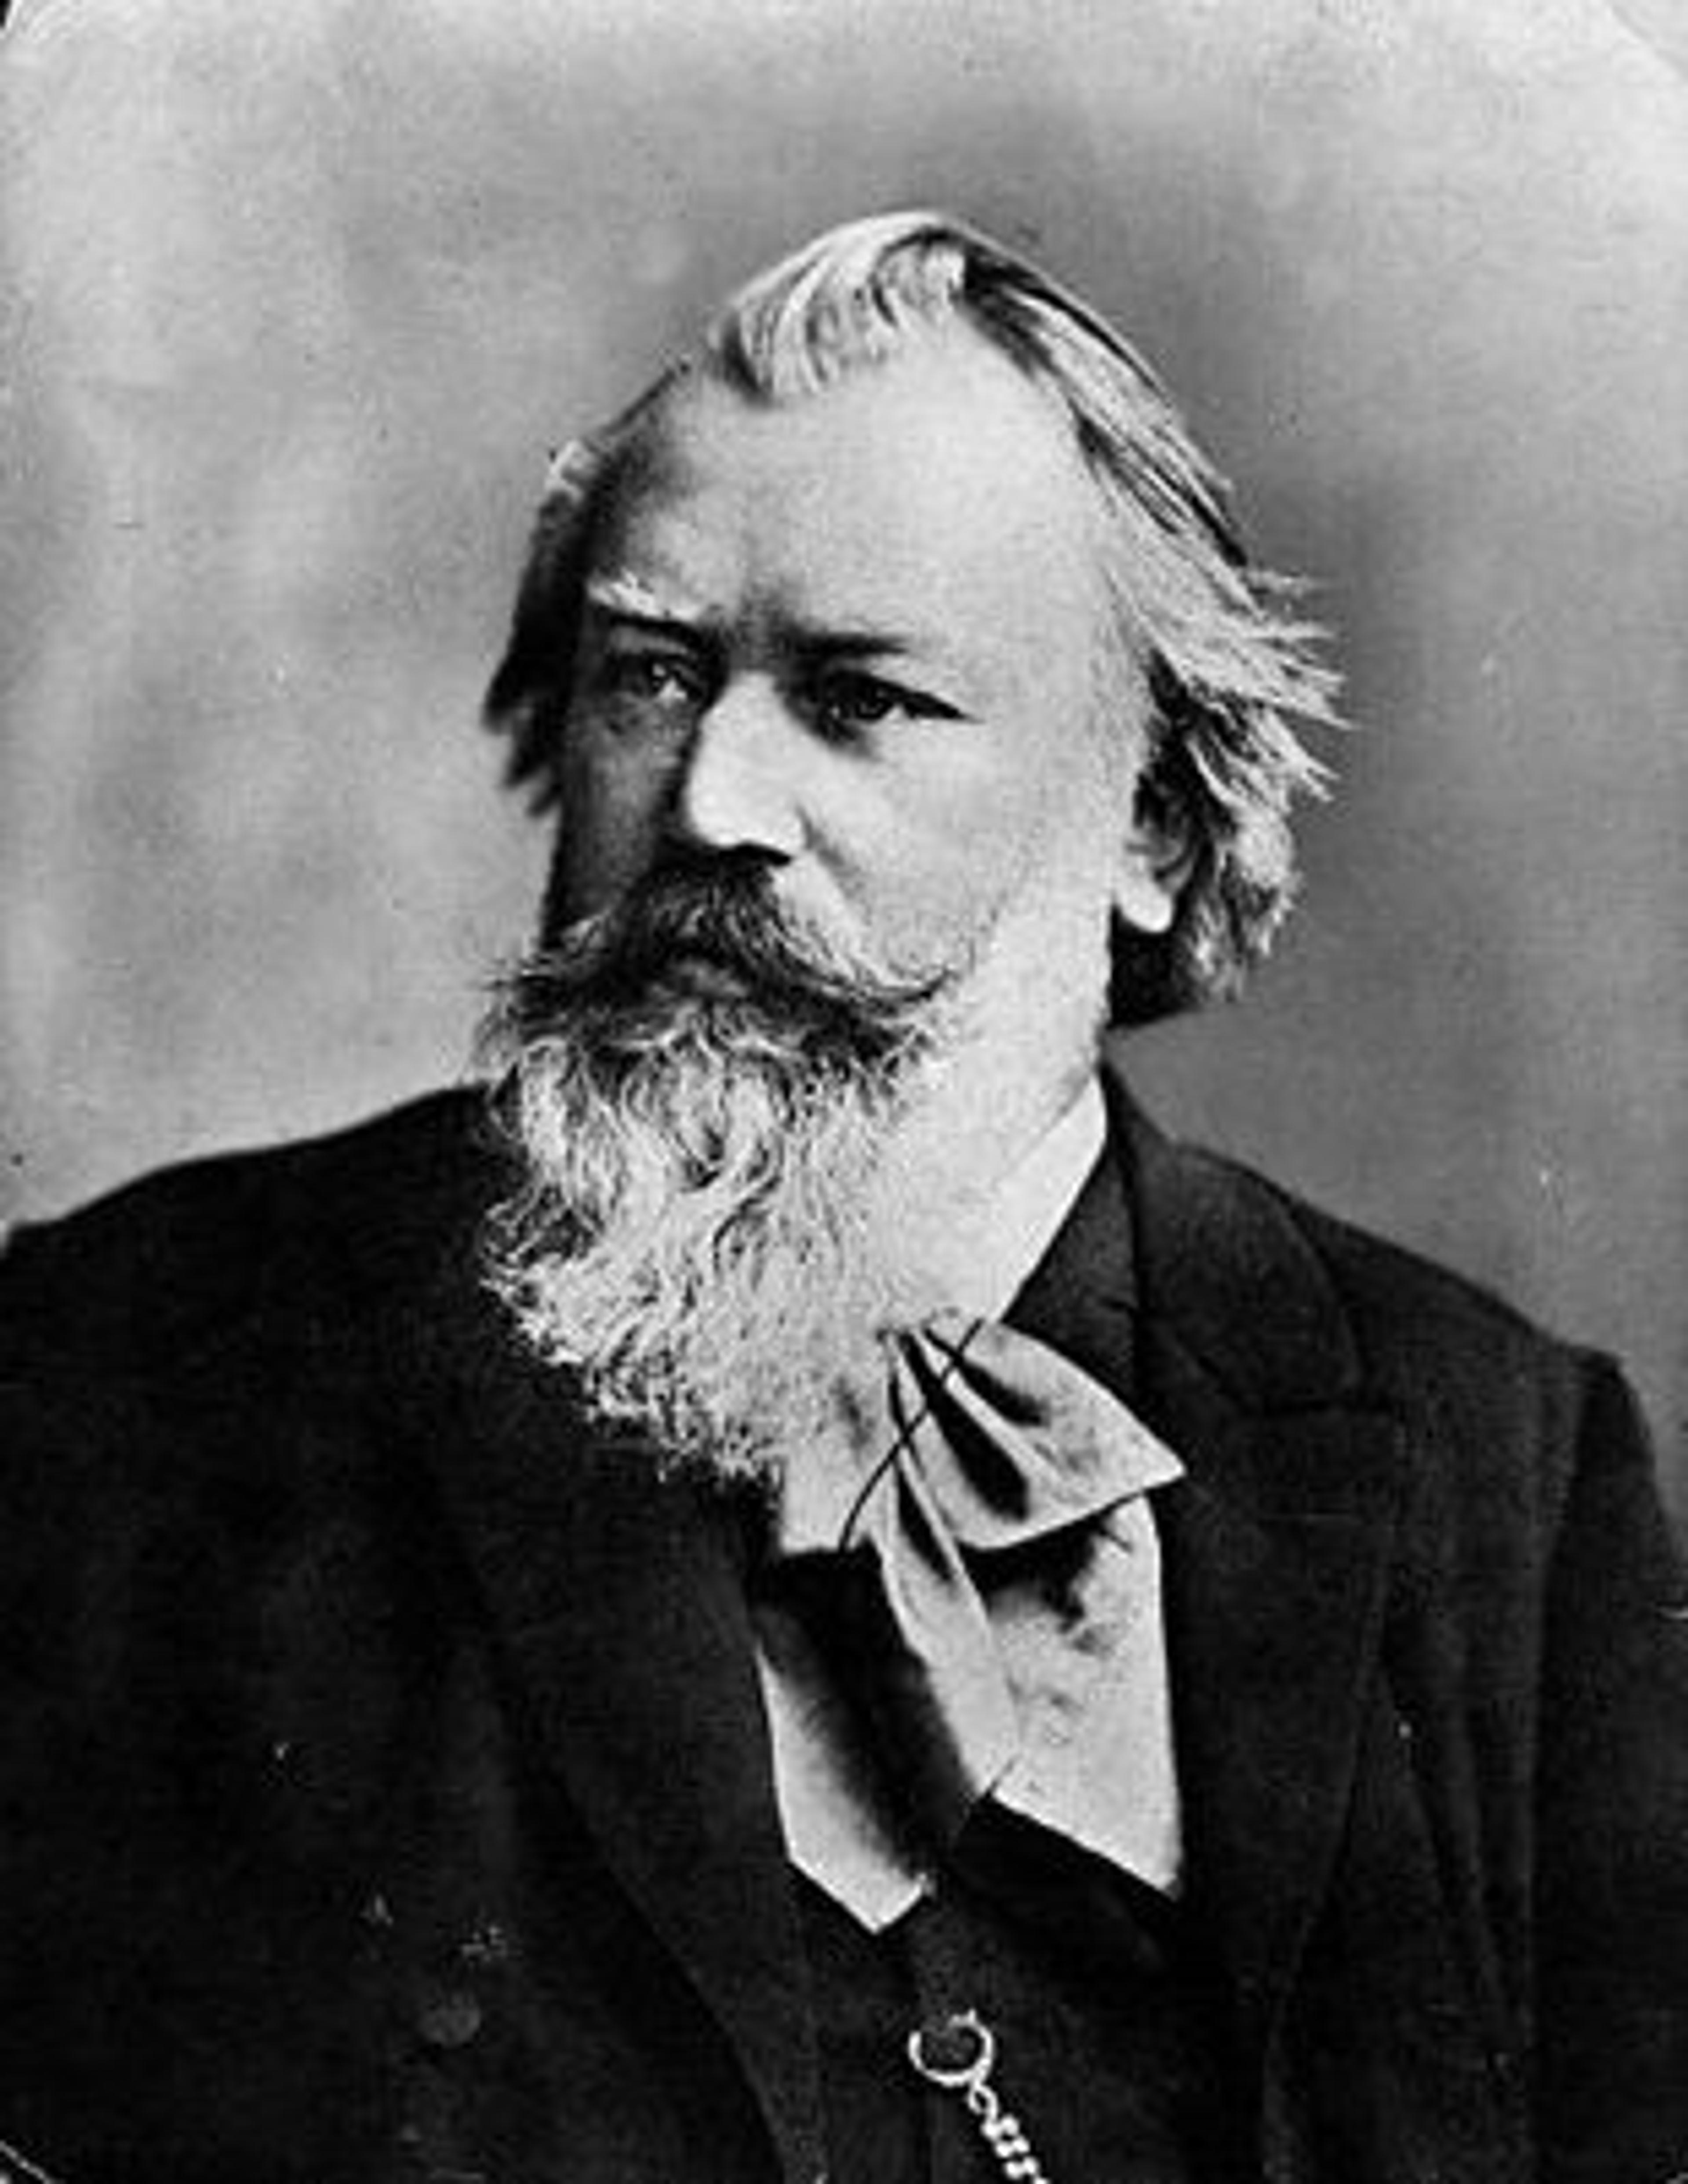 Left: Johannes Brahms. Public-domain image via Wikimedia Commons